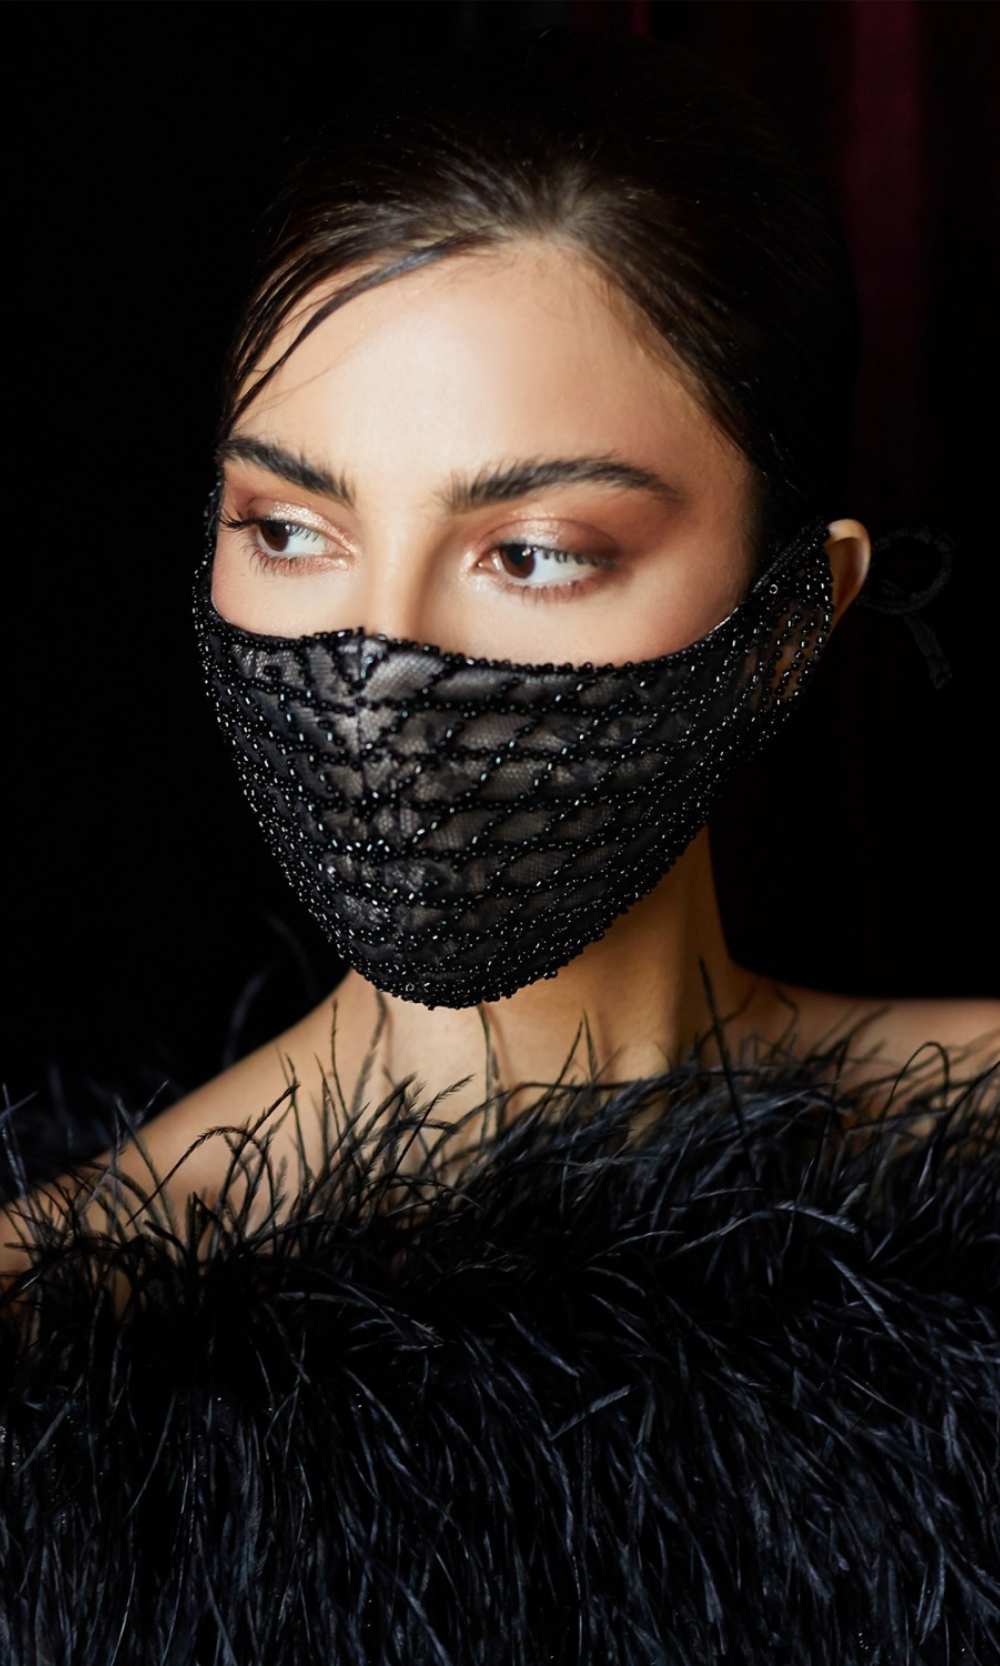 Black Sequin Beaded Masks